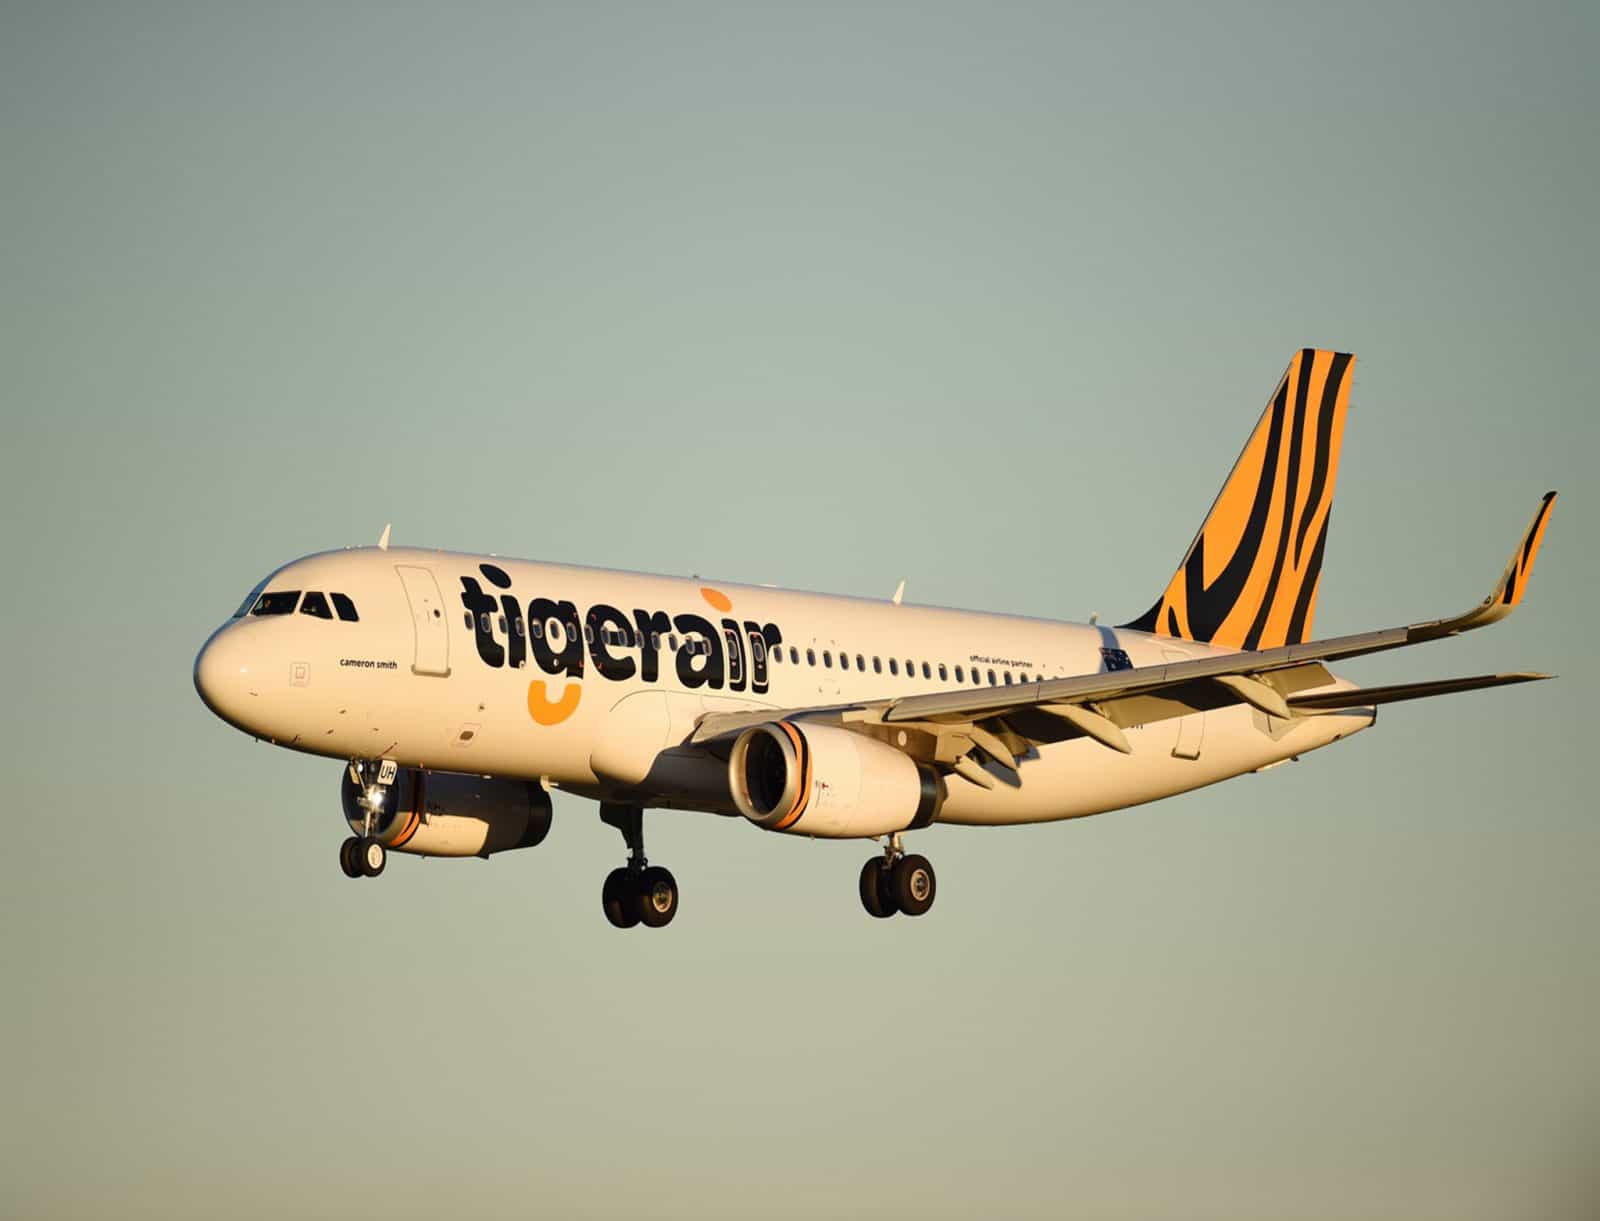 Tigerair Australia. Photo: Jon Hewson